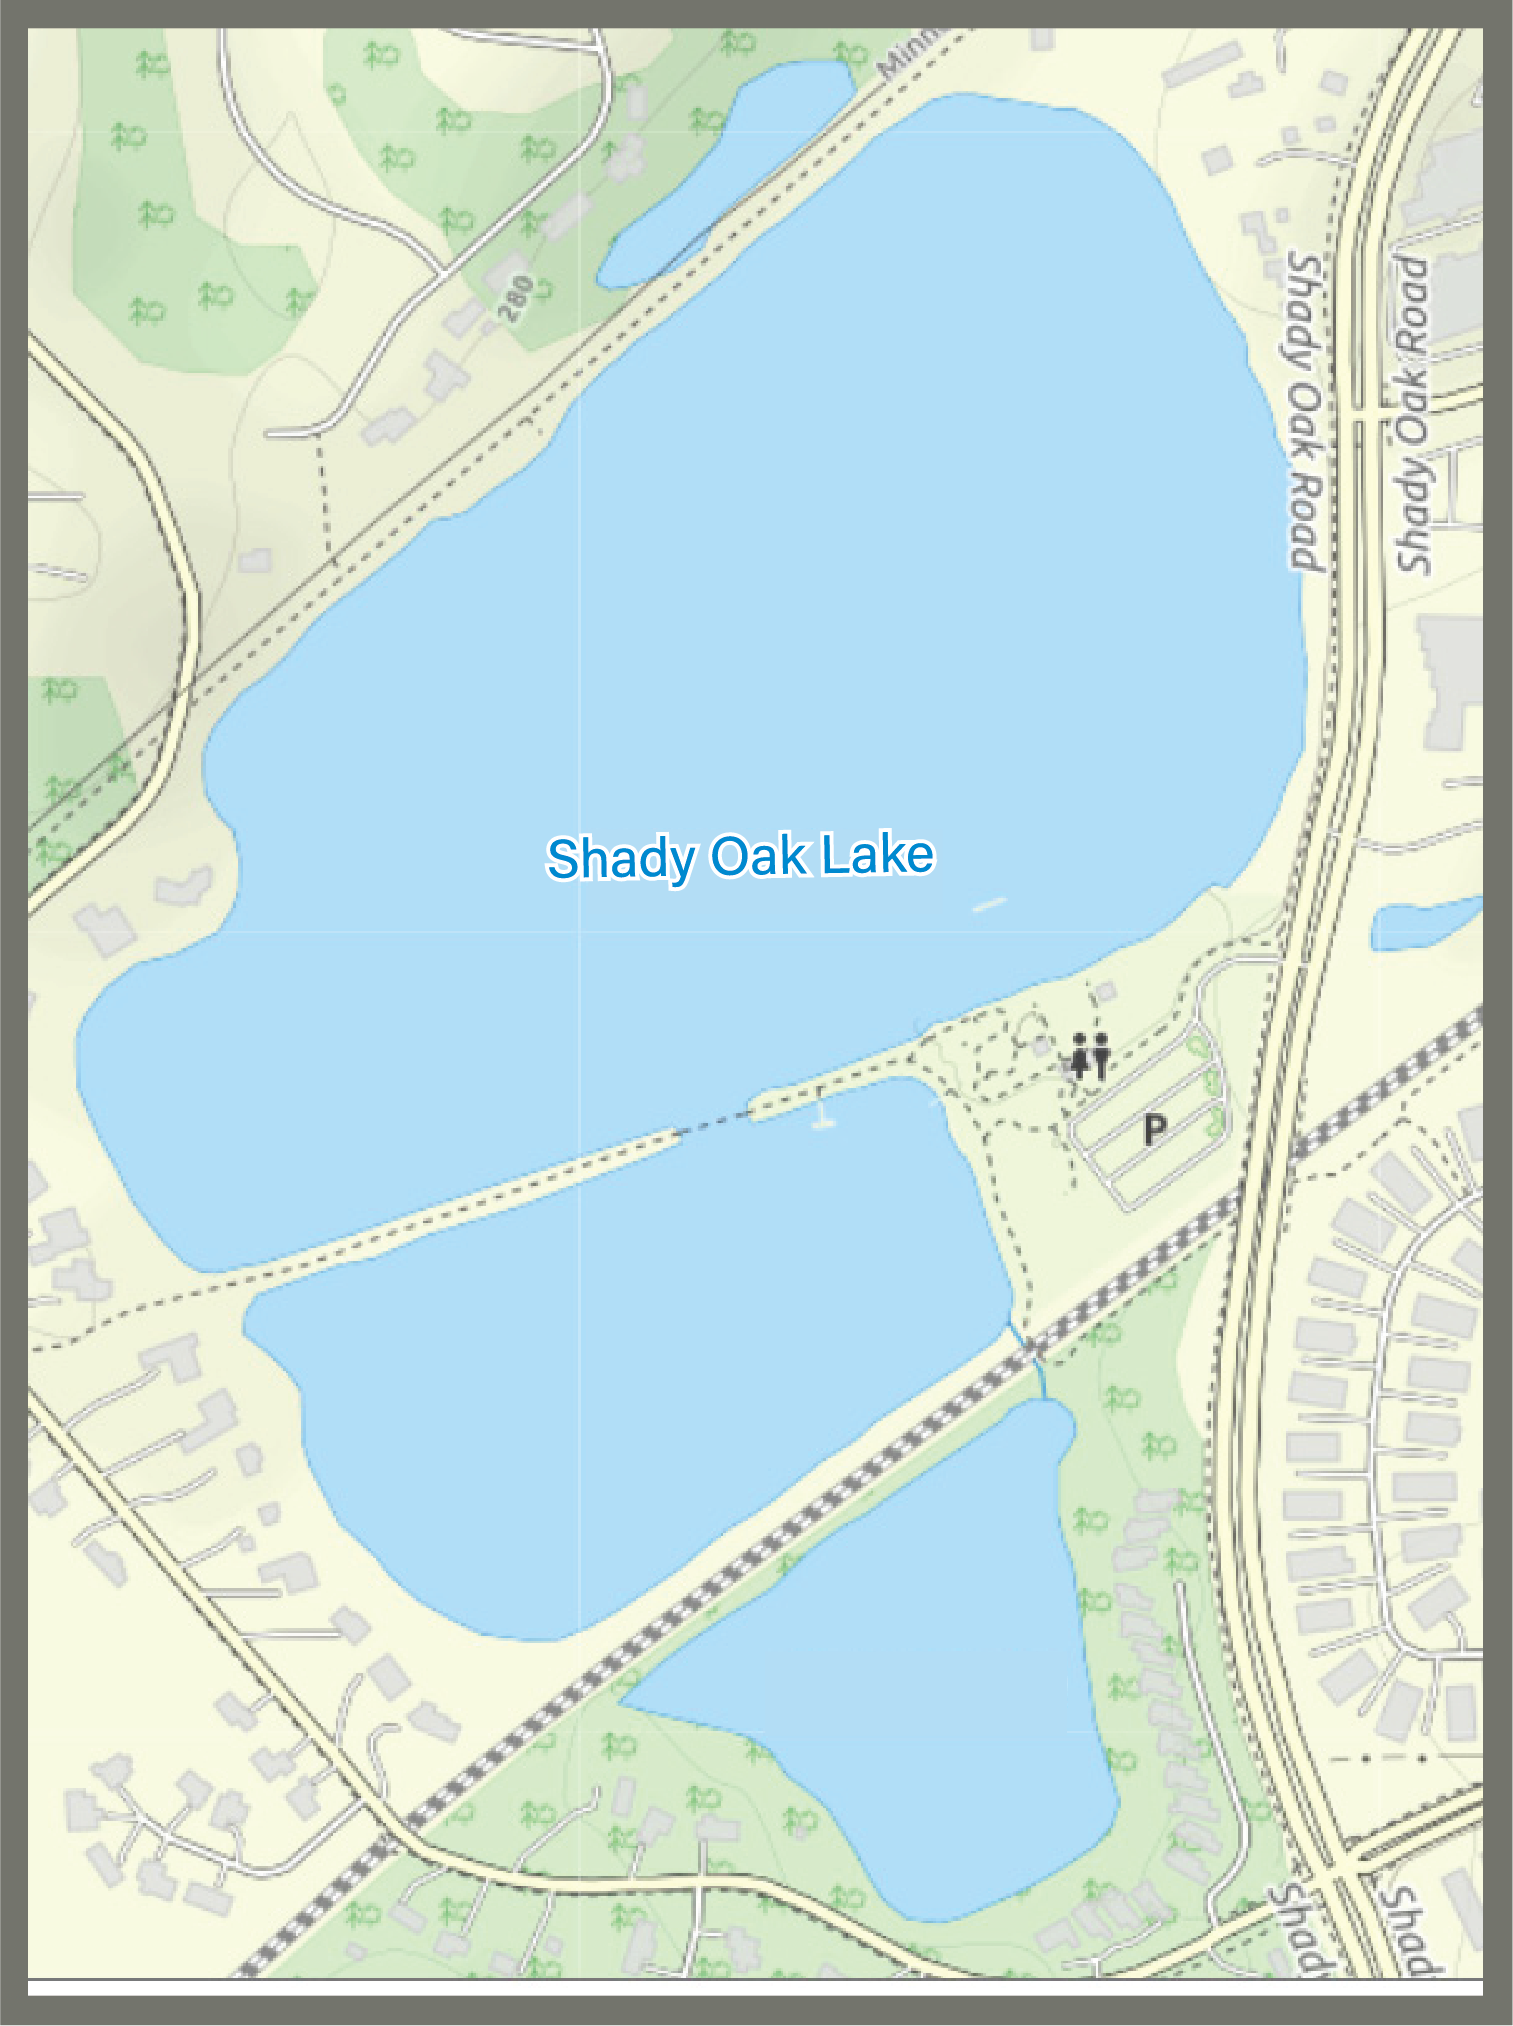 Street view map of shady oak lake